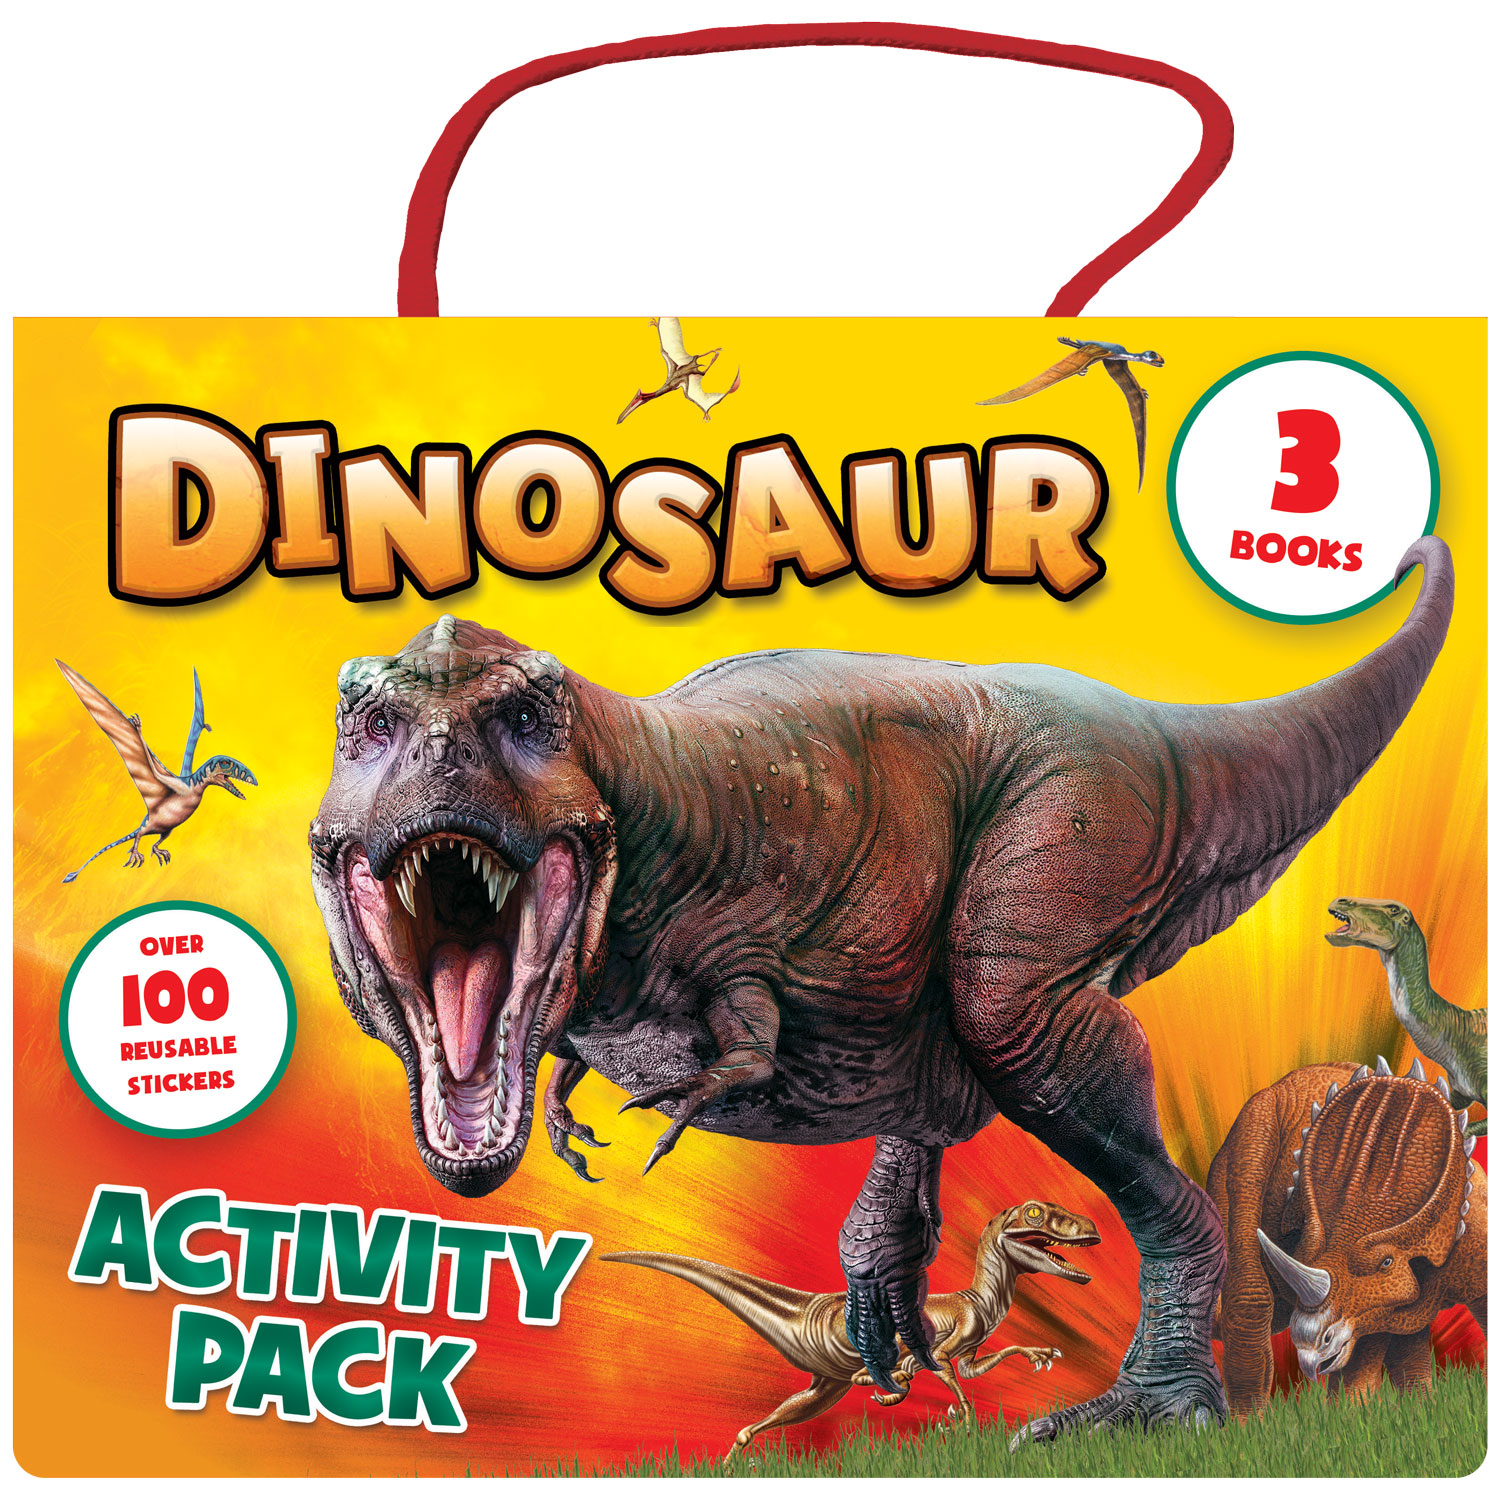 Dinosaur activity pack